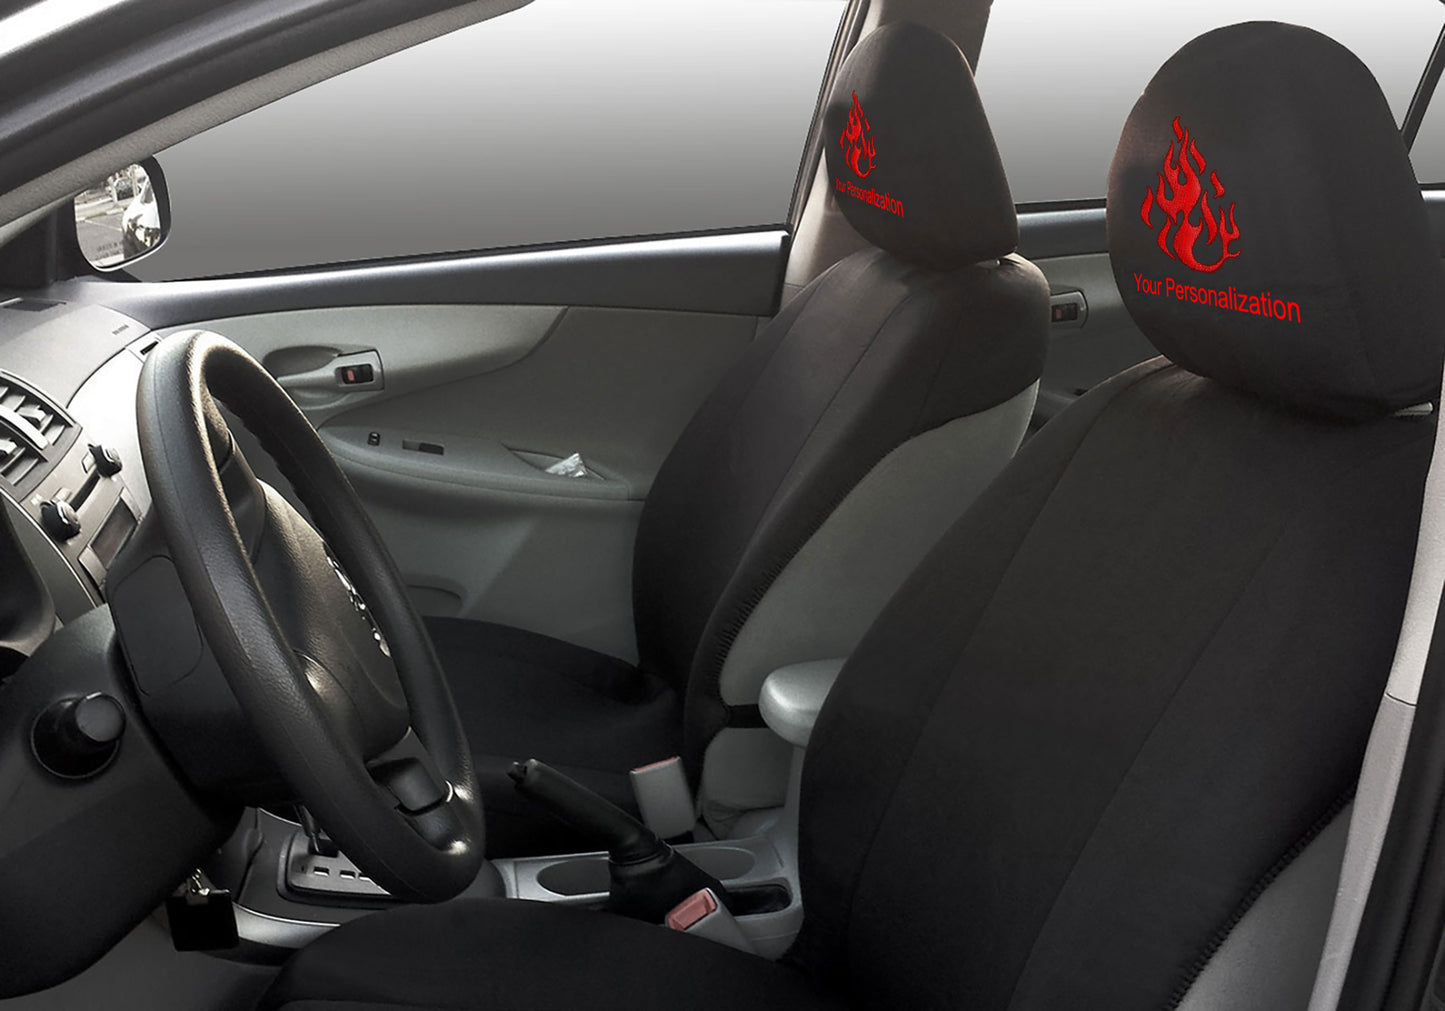 YupbizAuto Personalized Embroidery Red Flame Logo Auto Truck SUV Car Seat Headrest Cover Accessory 1 Piece - Yupbizauto